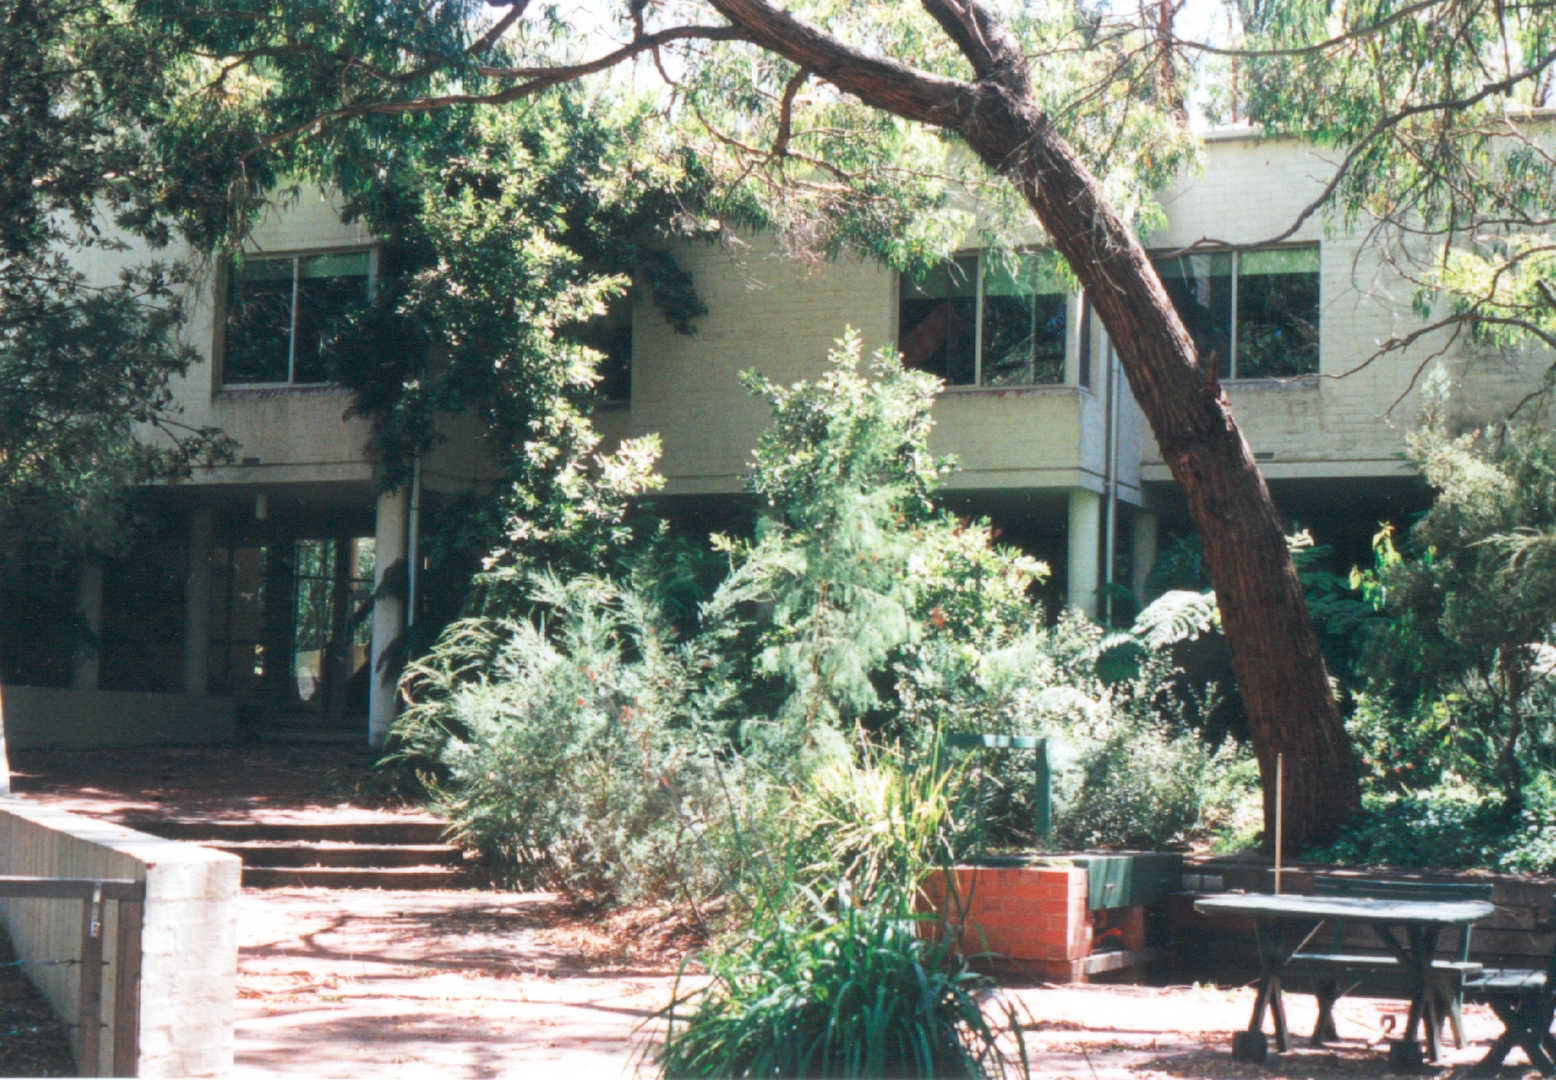 Brahma kumaris center at backster,australia - 18